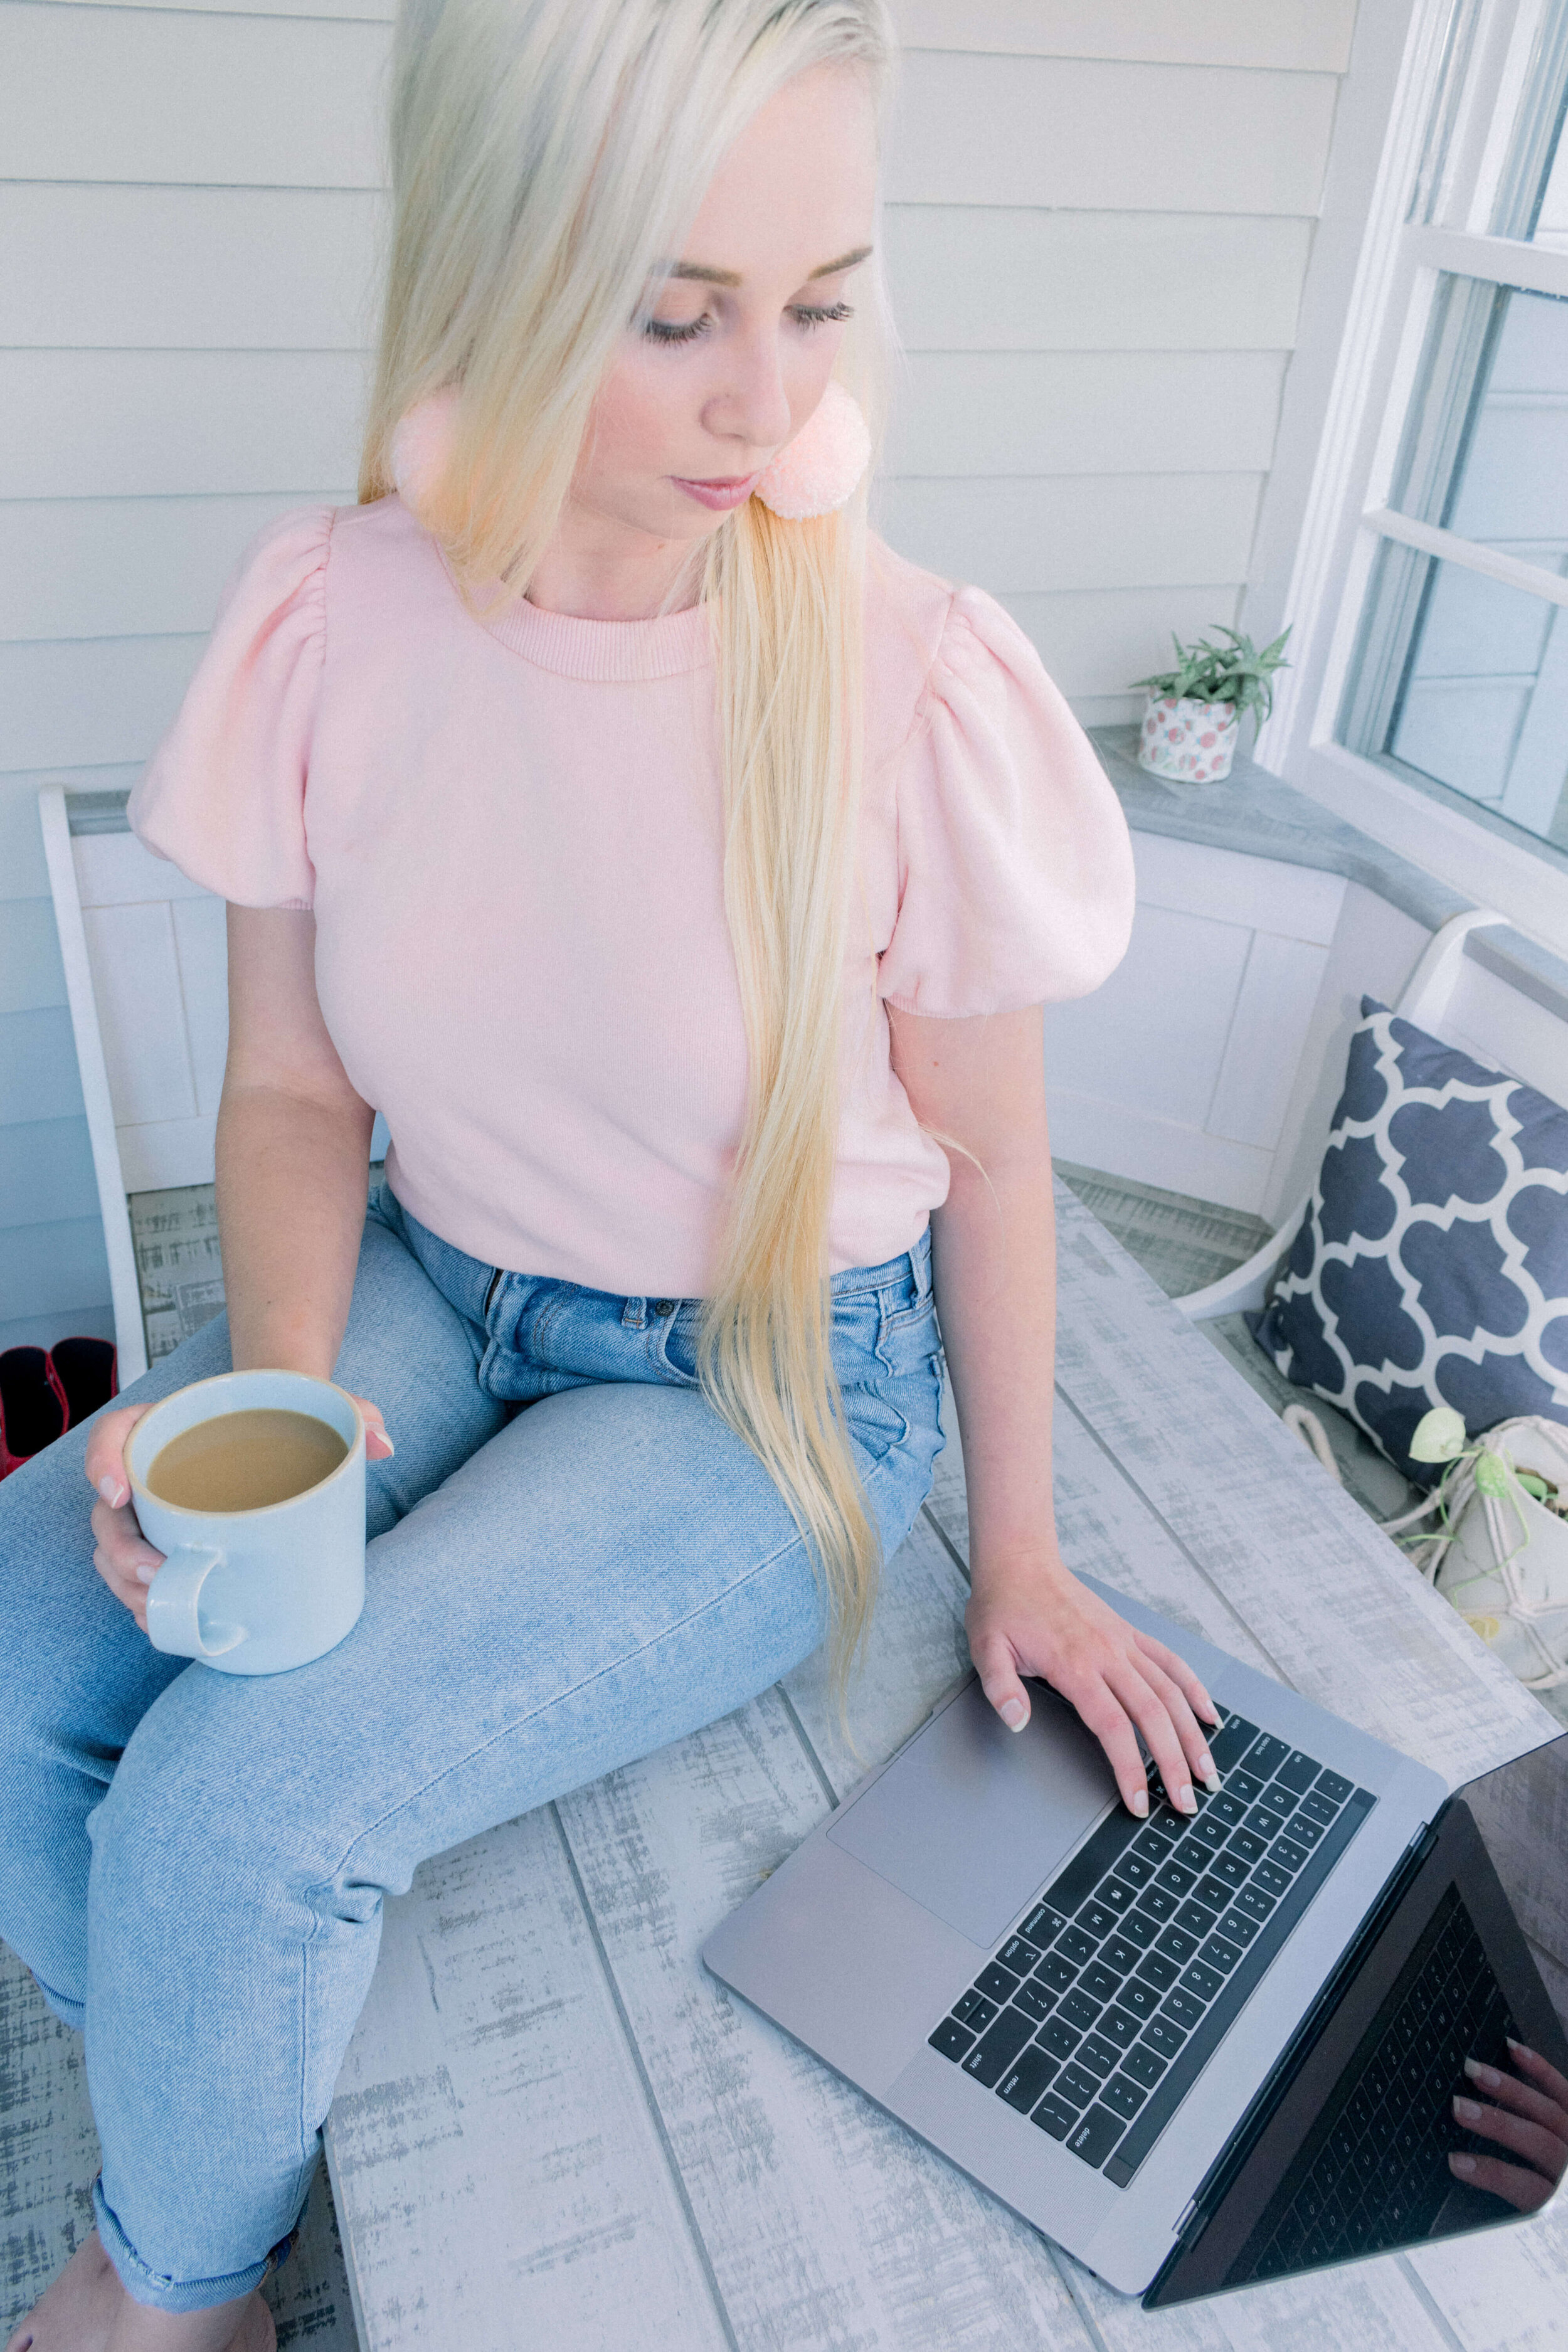 Kenzi Green Website Designer sitting on table drinking coffee working on laptop